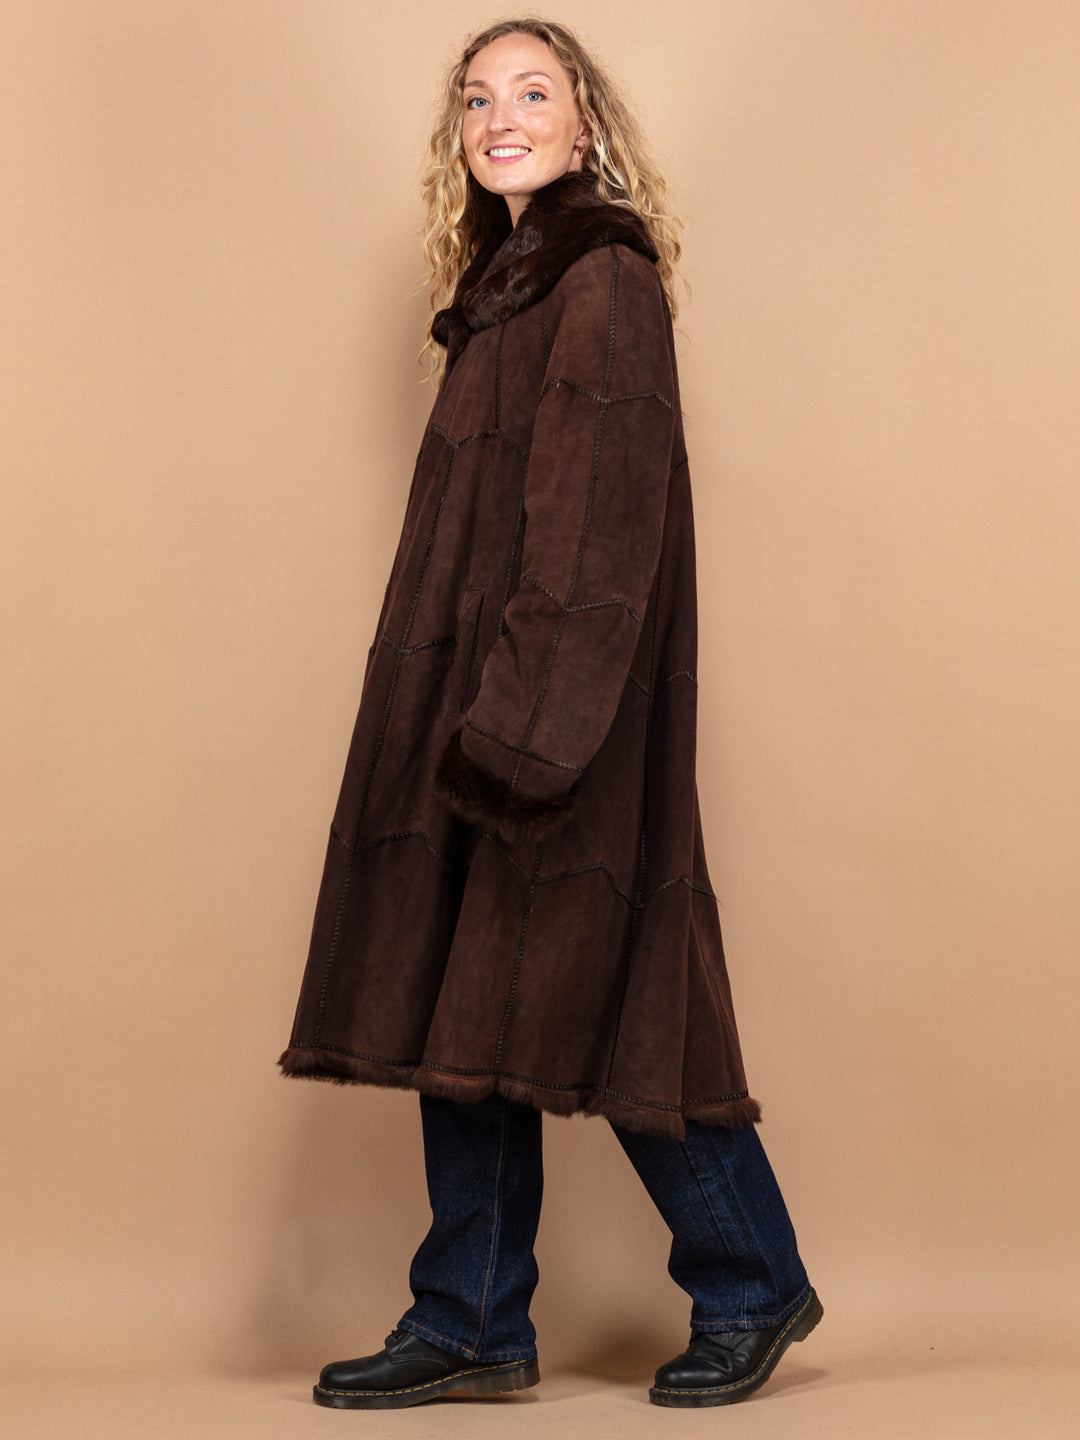 Lapin Fur Coat, Size Large XL Fur Coat, 70s Luxurious Coat, Brown Fur Overcoat, Penny Lane Fur Coat, Retro Chic Fur Coat, 70s Outerwear